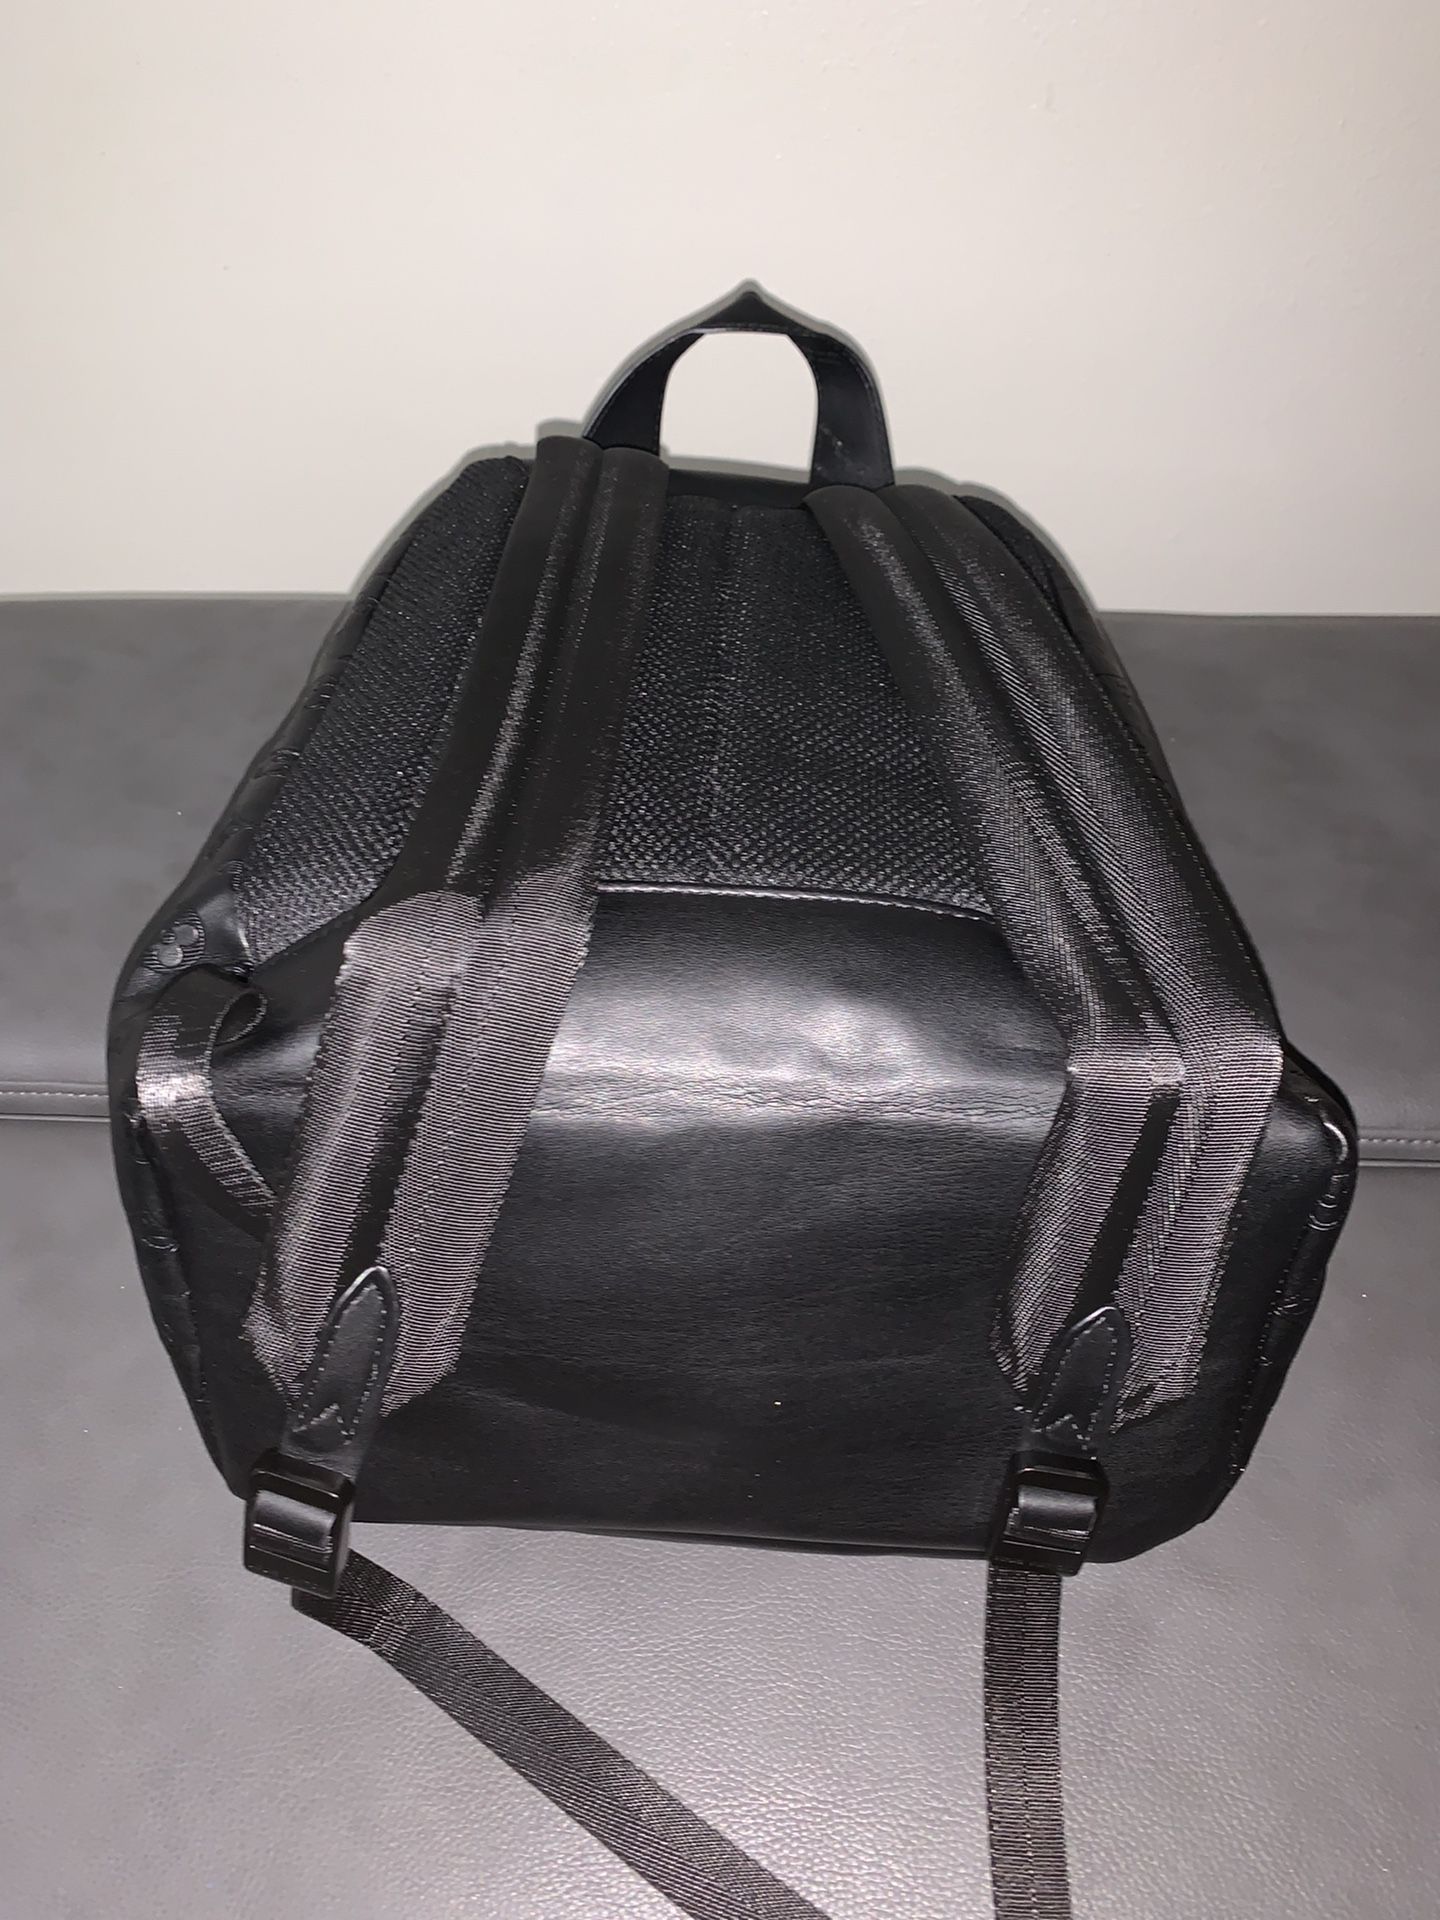 ORIGINAL LV Limited Edition Bag for Sale in Miramar, FL - OfferUp